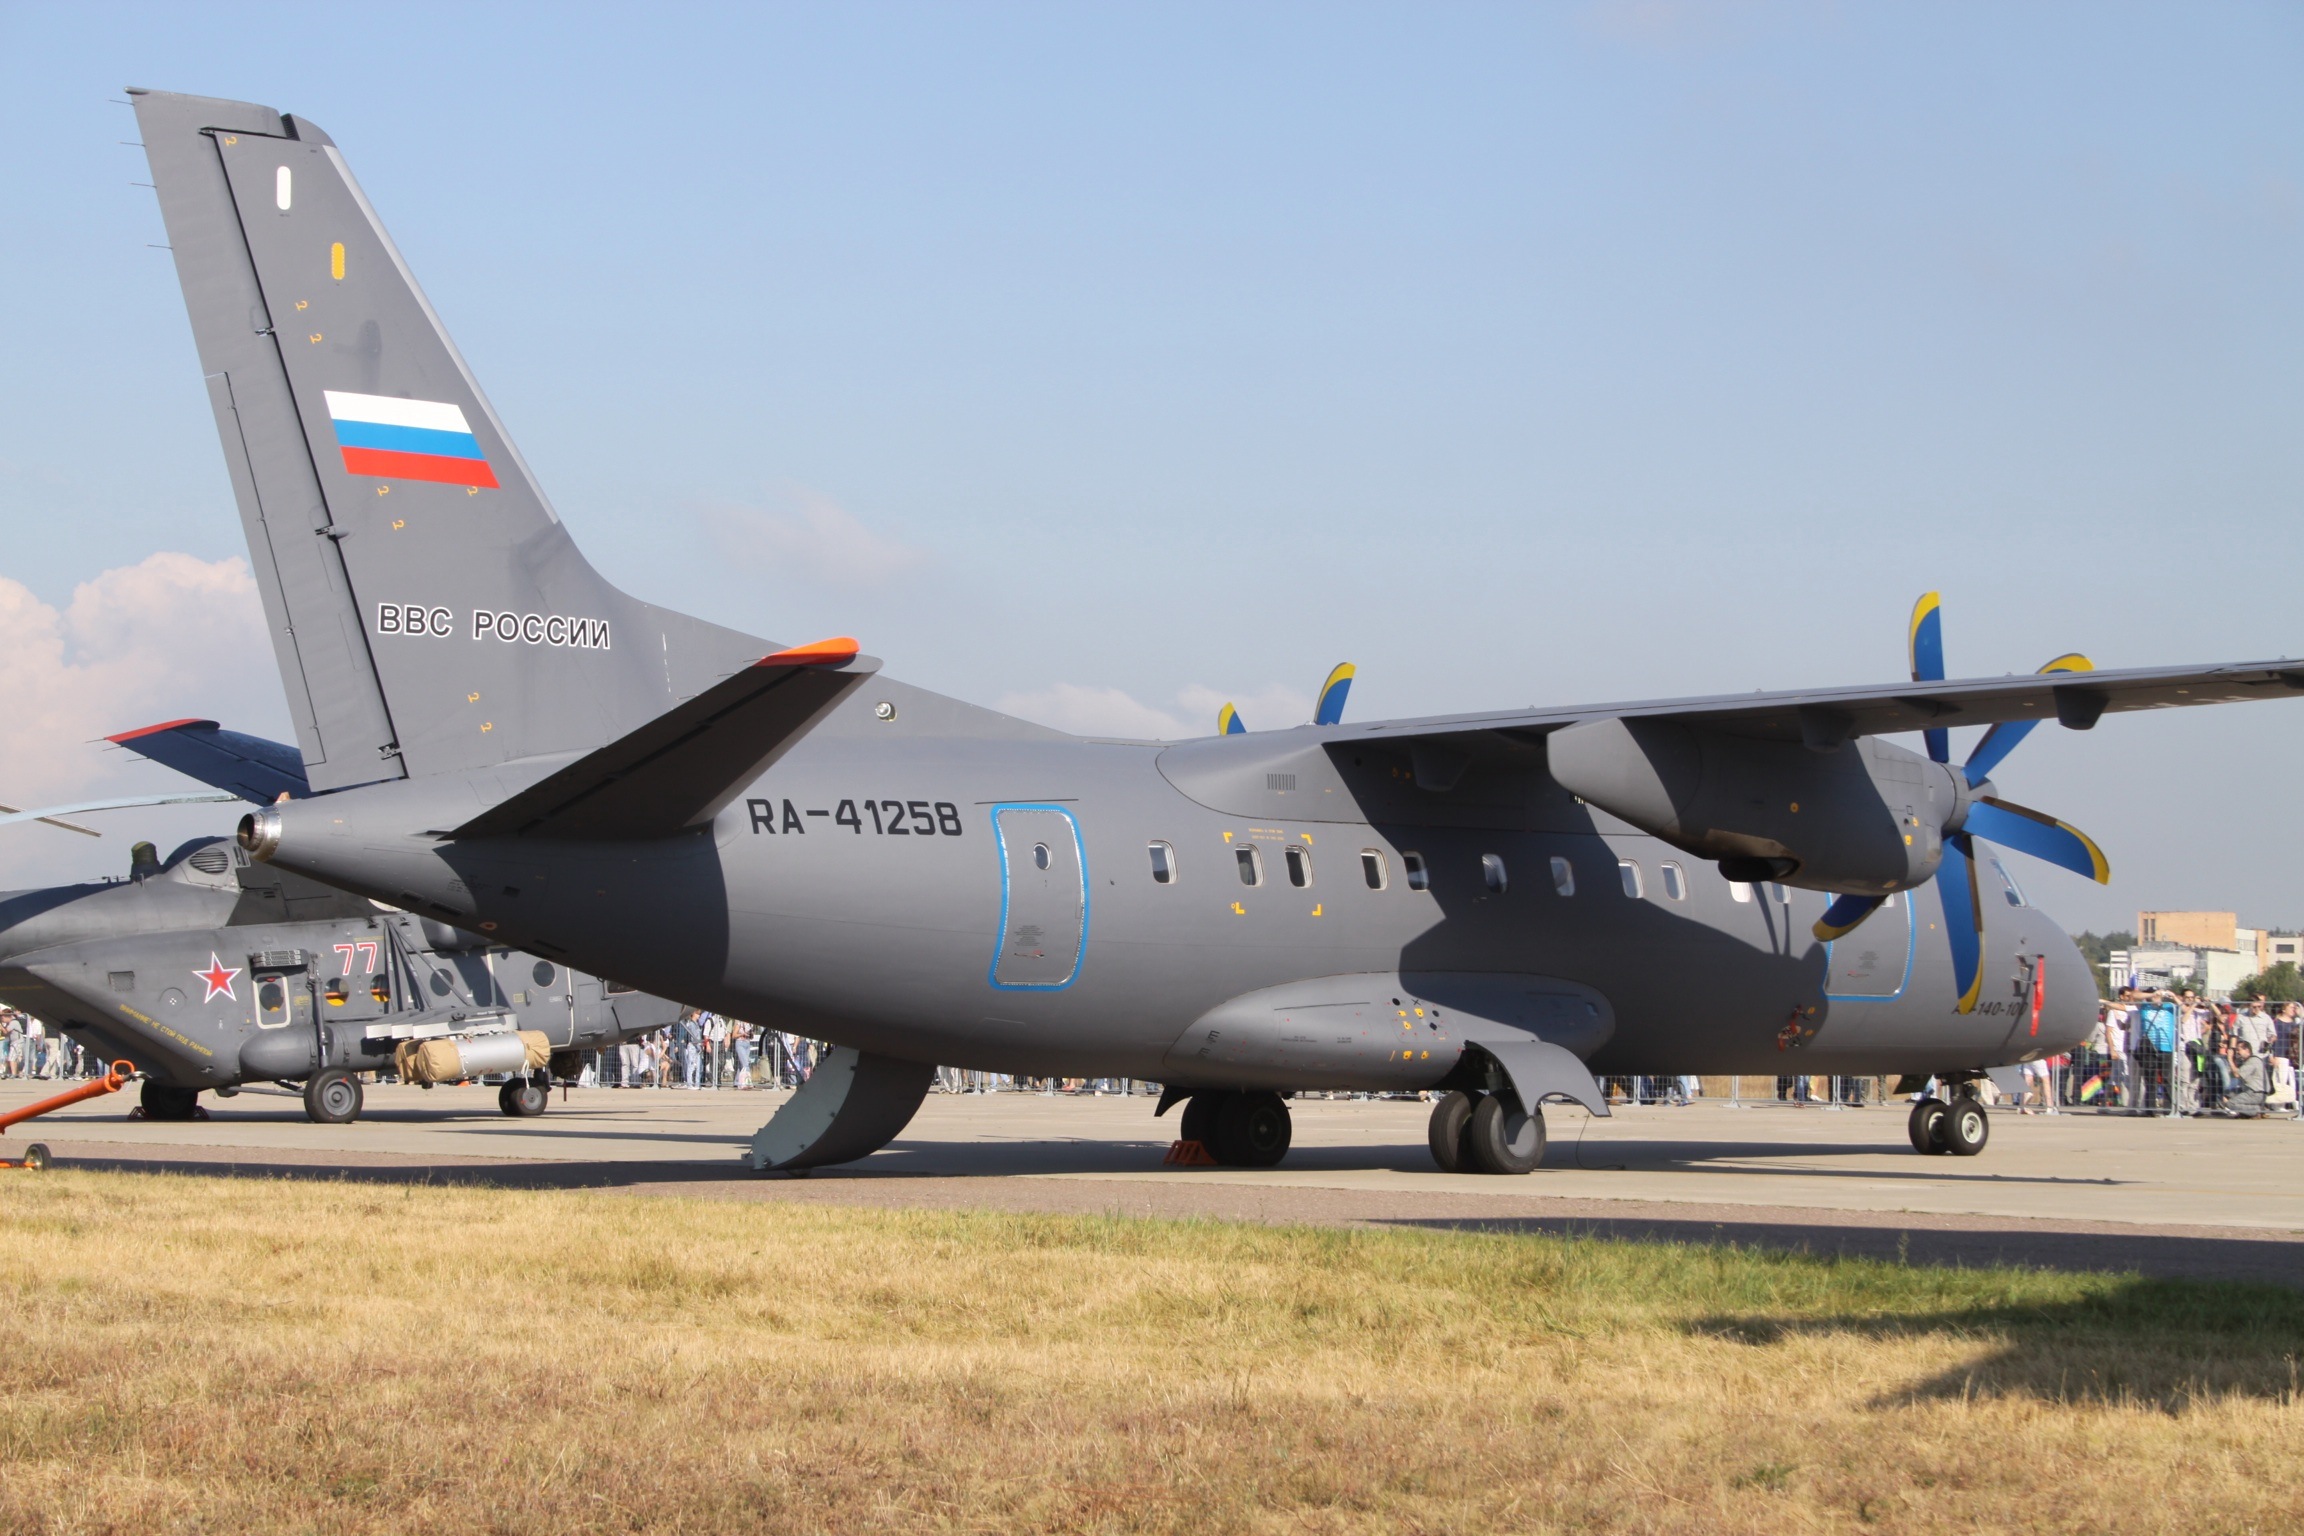 https://upload.wikimedia.org/wikipedia/commons/0/02/RA-41258_Antonov_An.140-100_Russian_Air_Force_%288019201800%29.jpg
